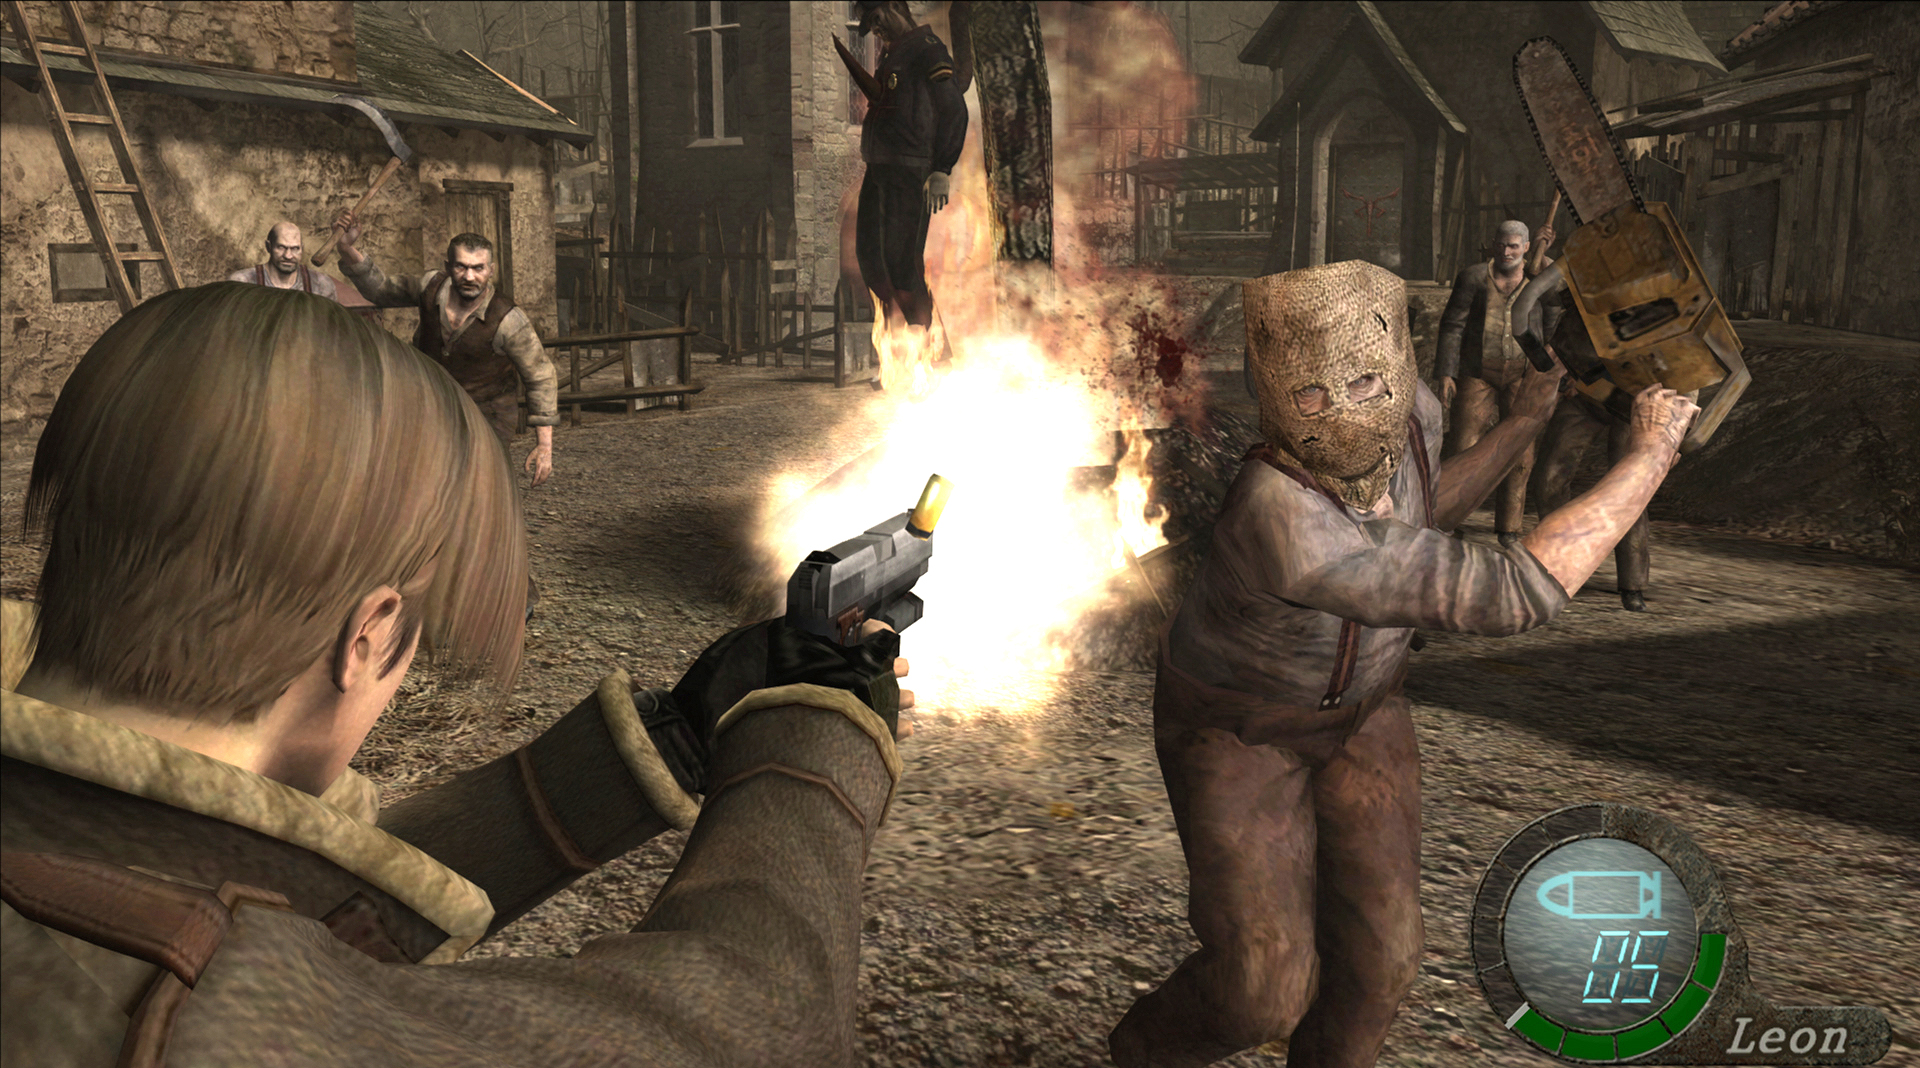 Buy Resident Evil 4 PC Steam key! Cheap price